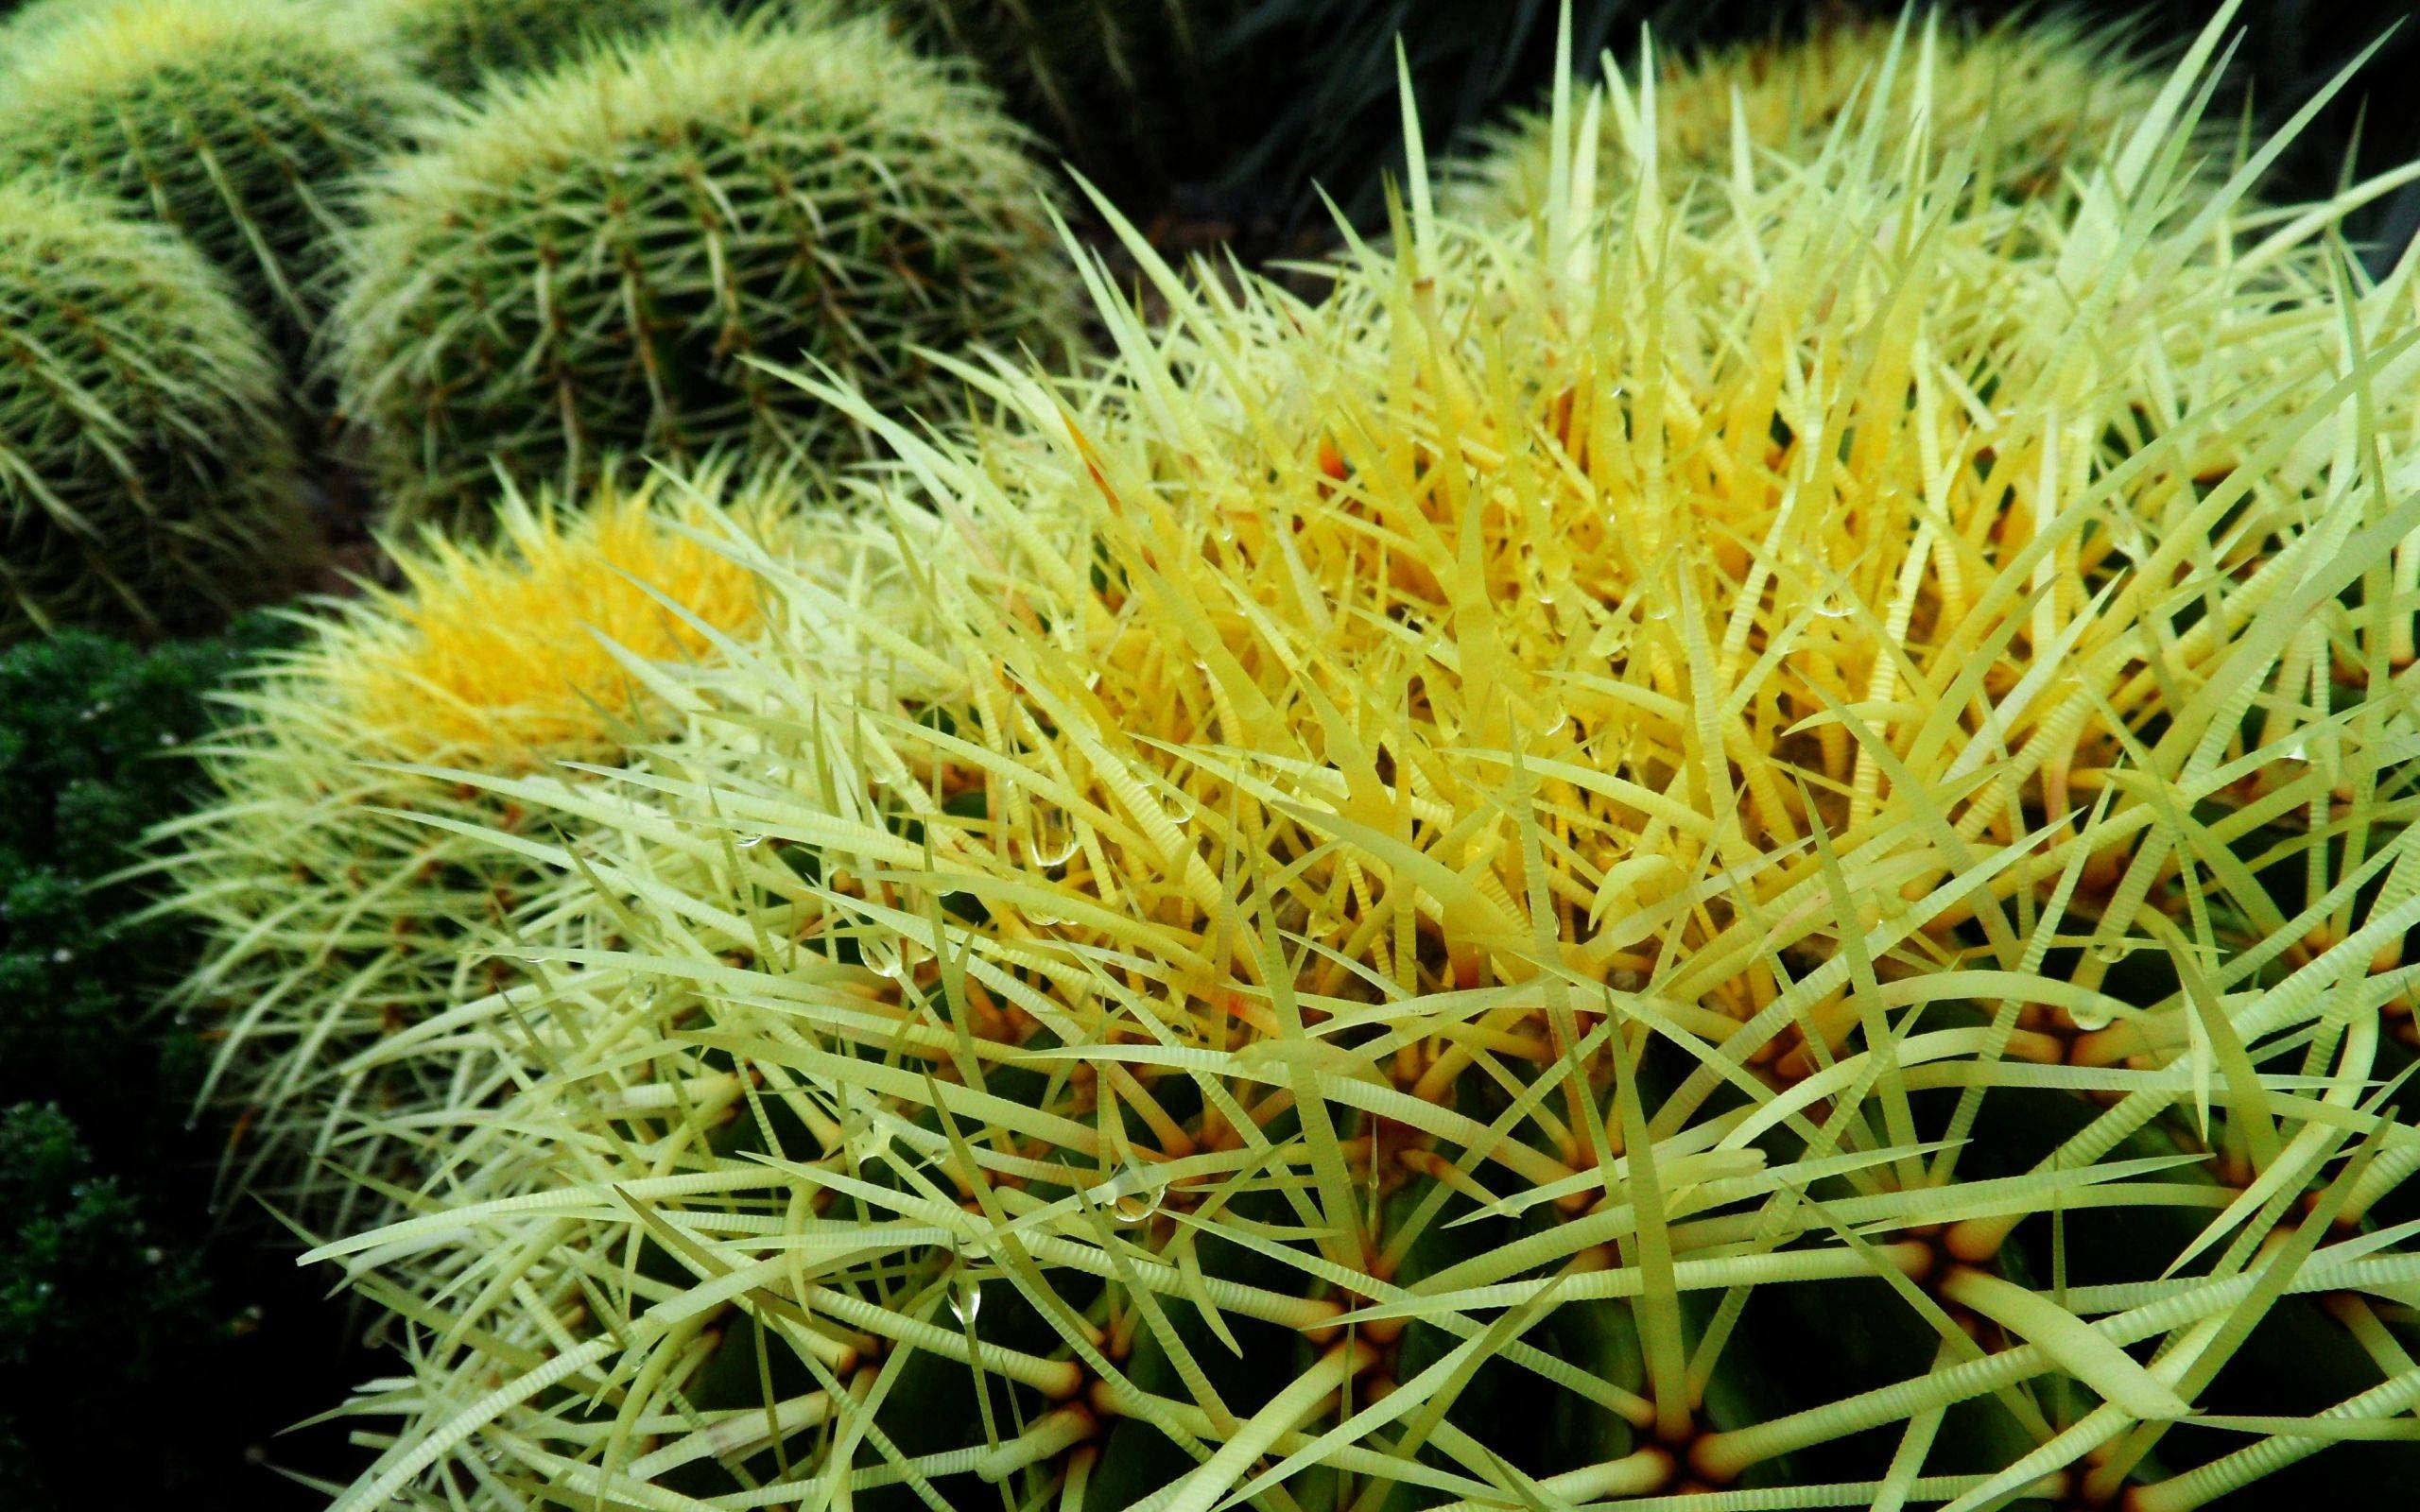 Round Cactus Yellow Thorns Background